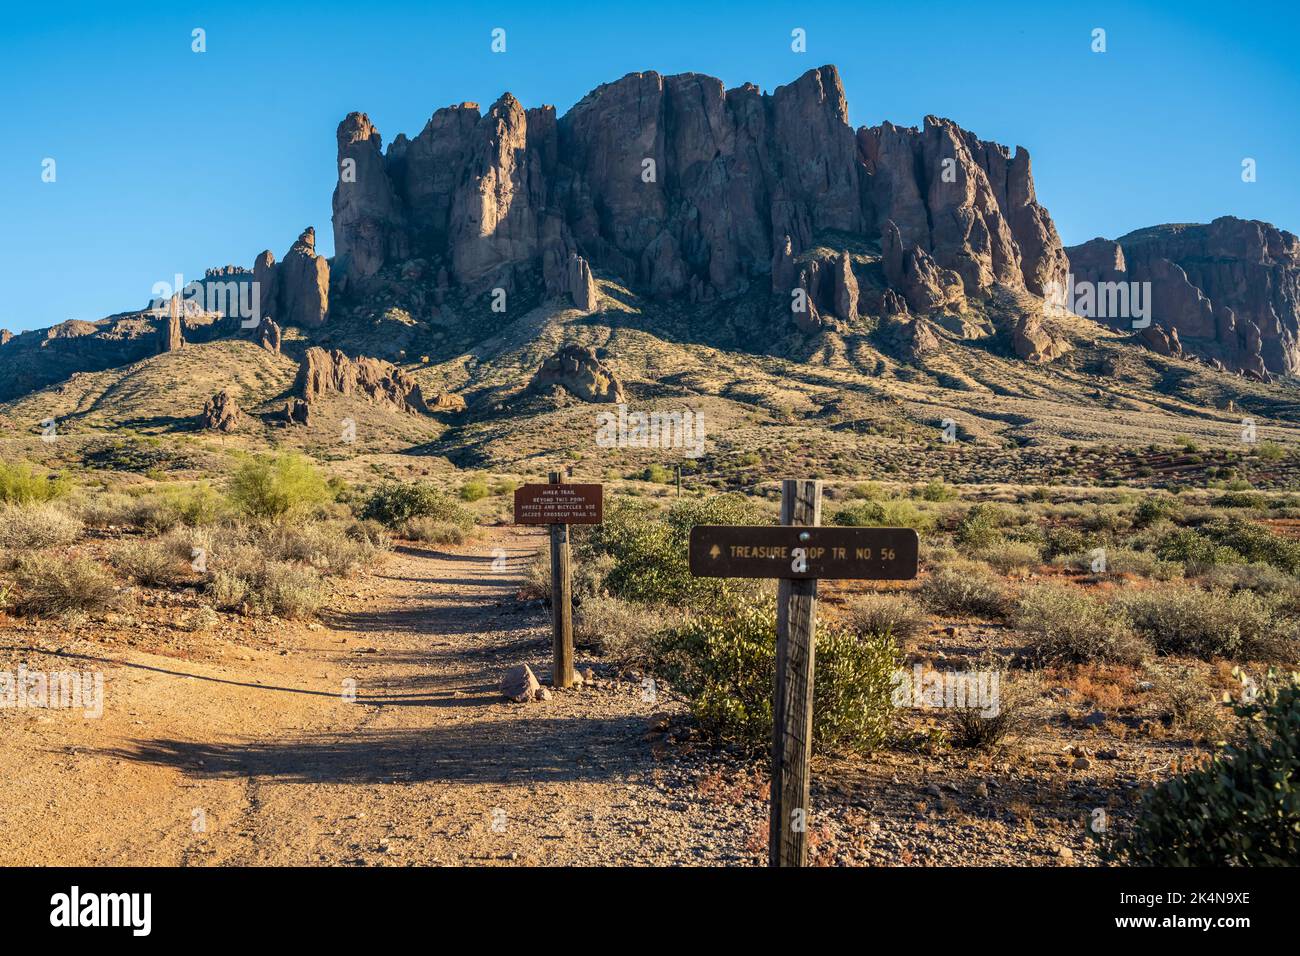 Apache Junction, AZ, USA - Dec 19, 2021: The Treasure Loop Mountain Trail Stock Photo